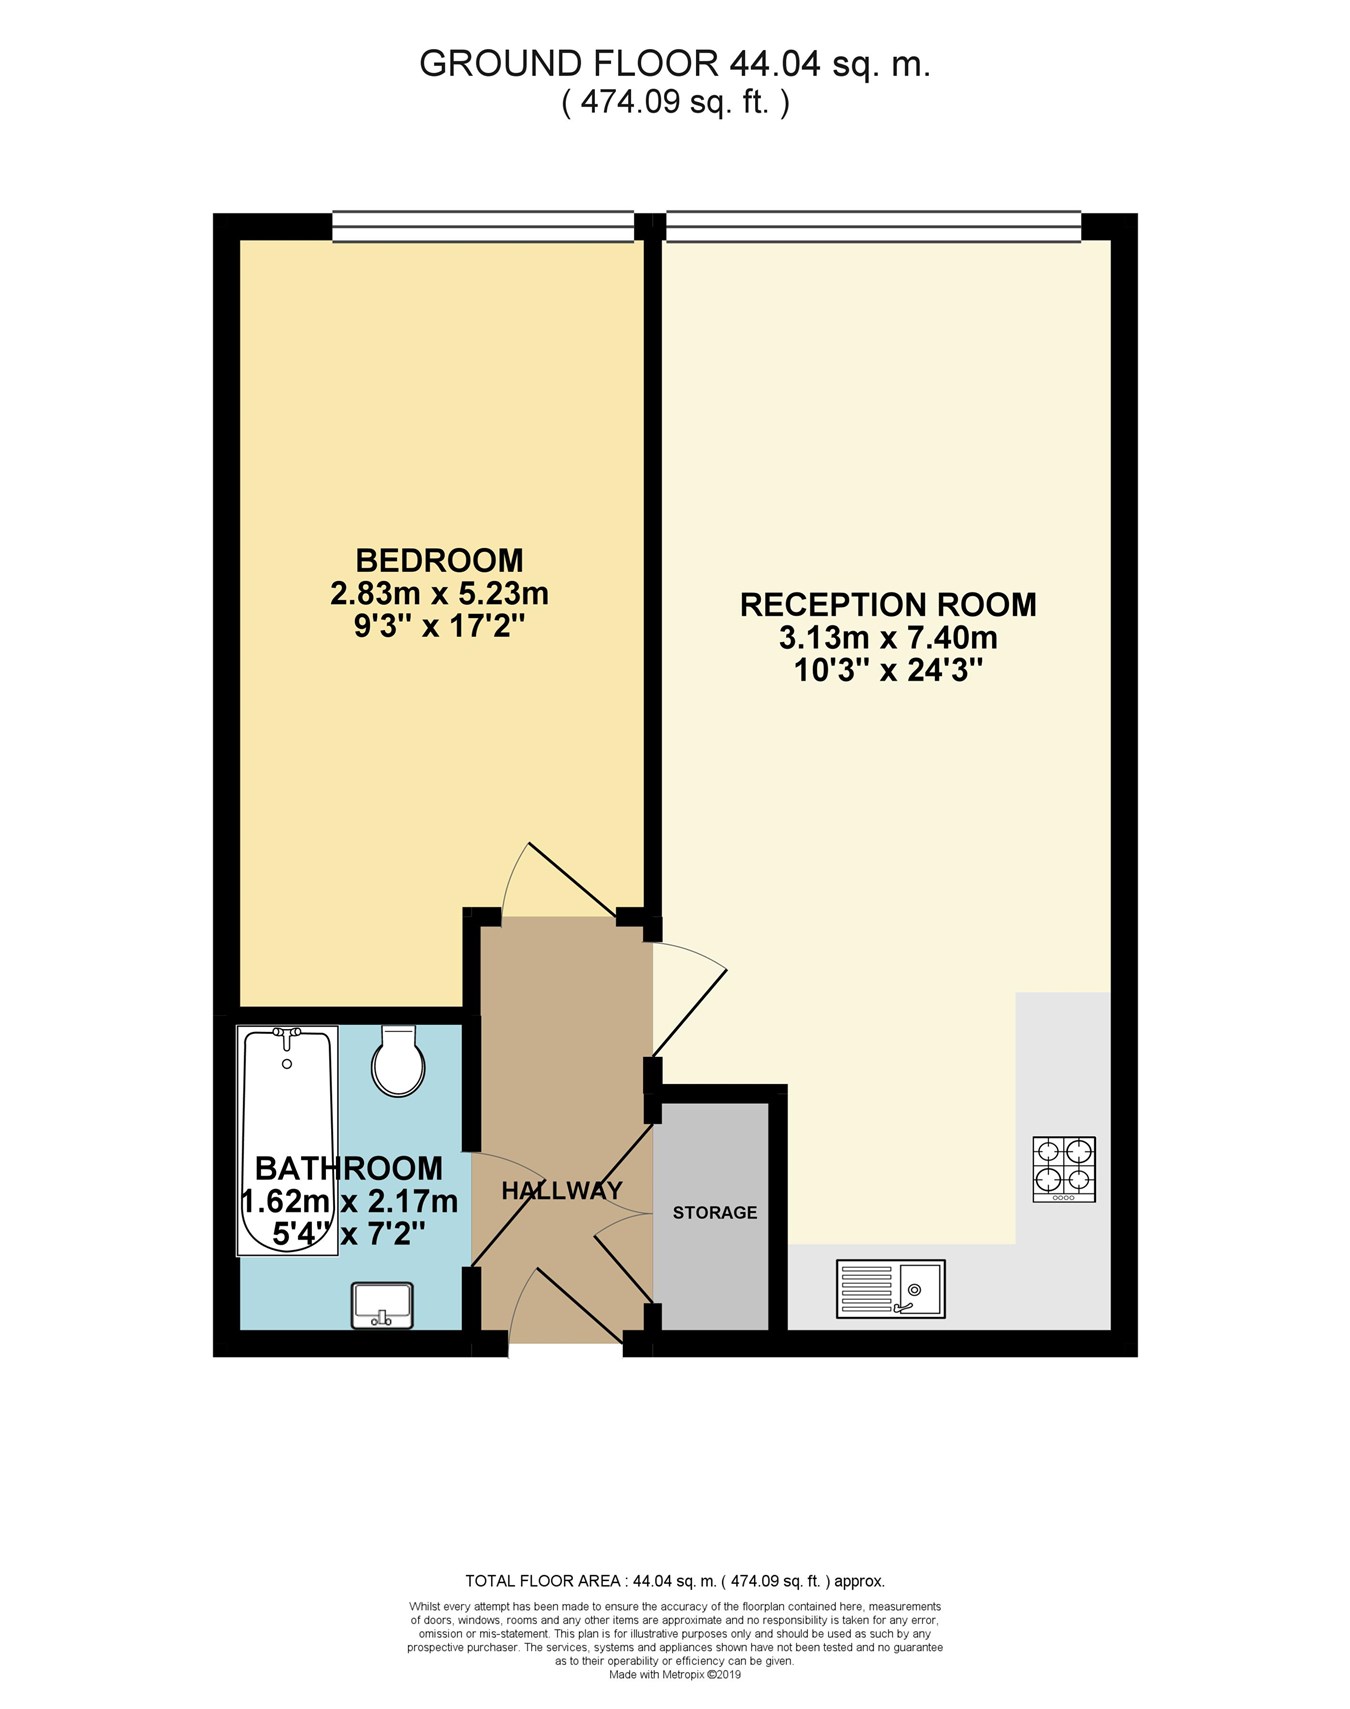 1 Bedrooms Flat to rent in Nobel Drive, Harlington, Hayes UB3